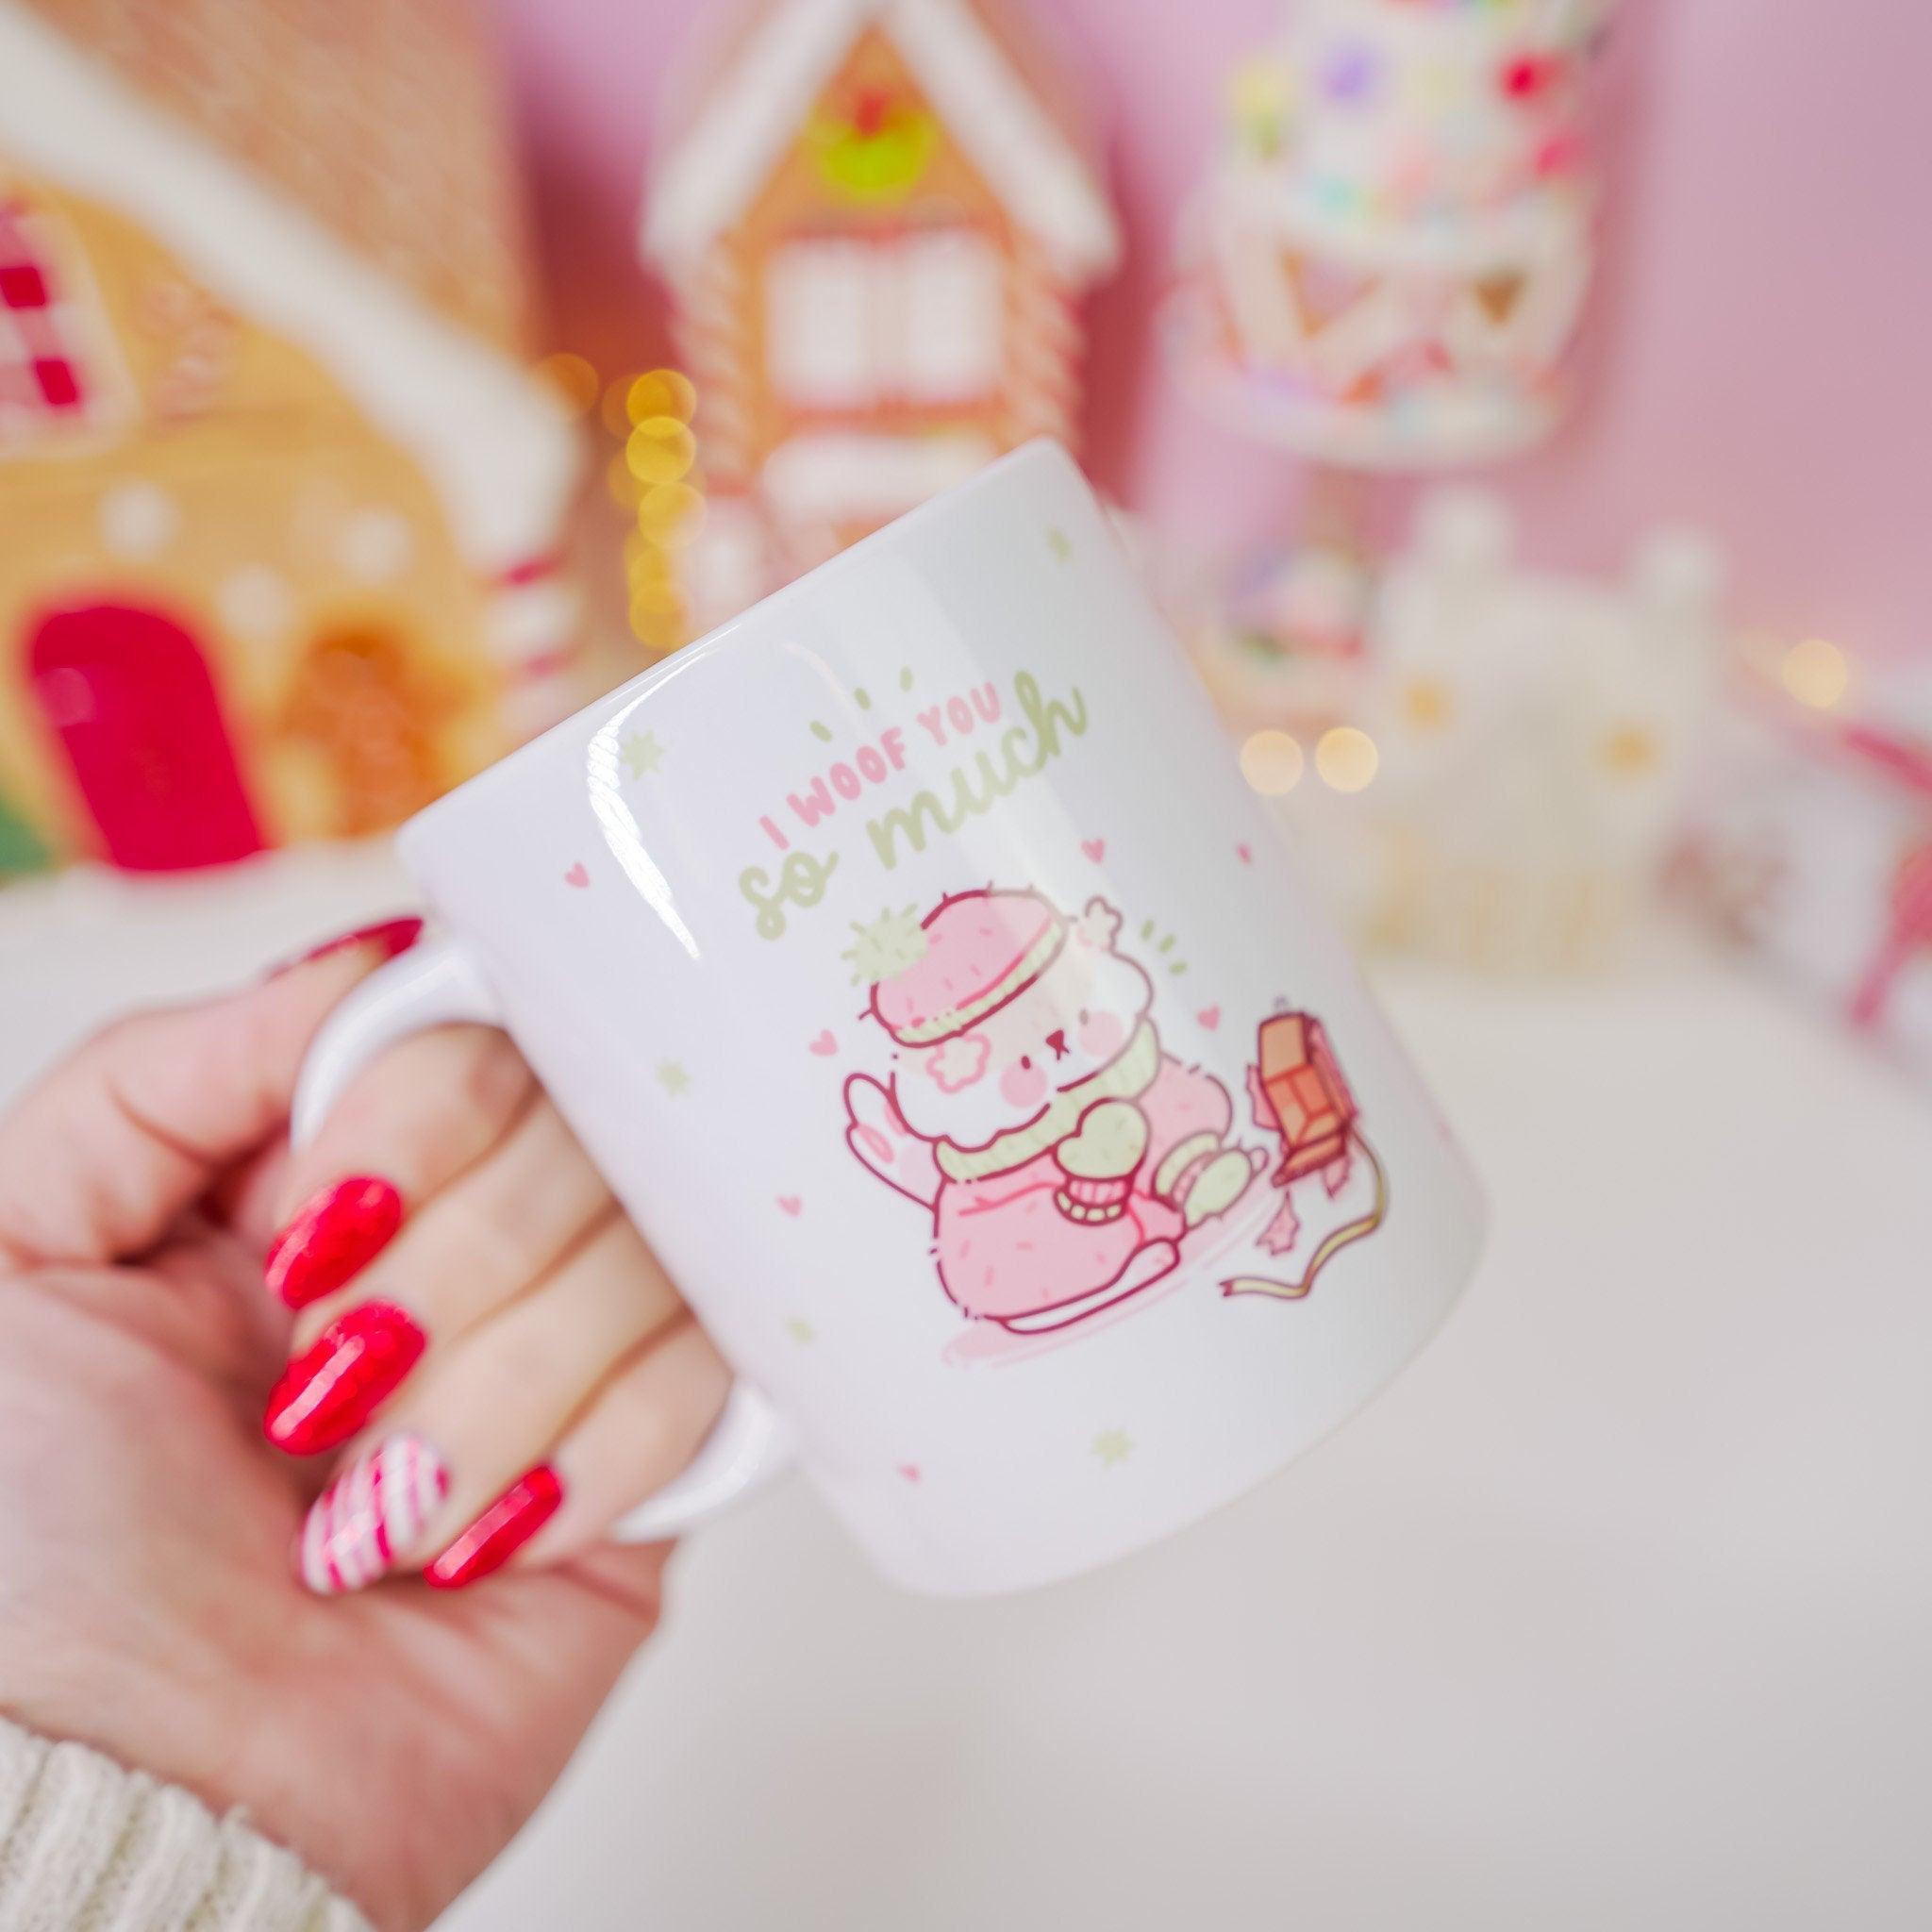 Adorable and cute Puddin' the Dog ceramic mug - perfect Christmas gift 🐶🎄,main close up